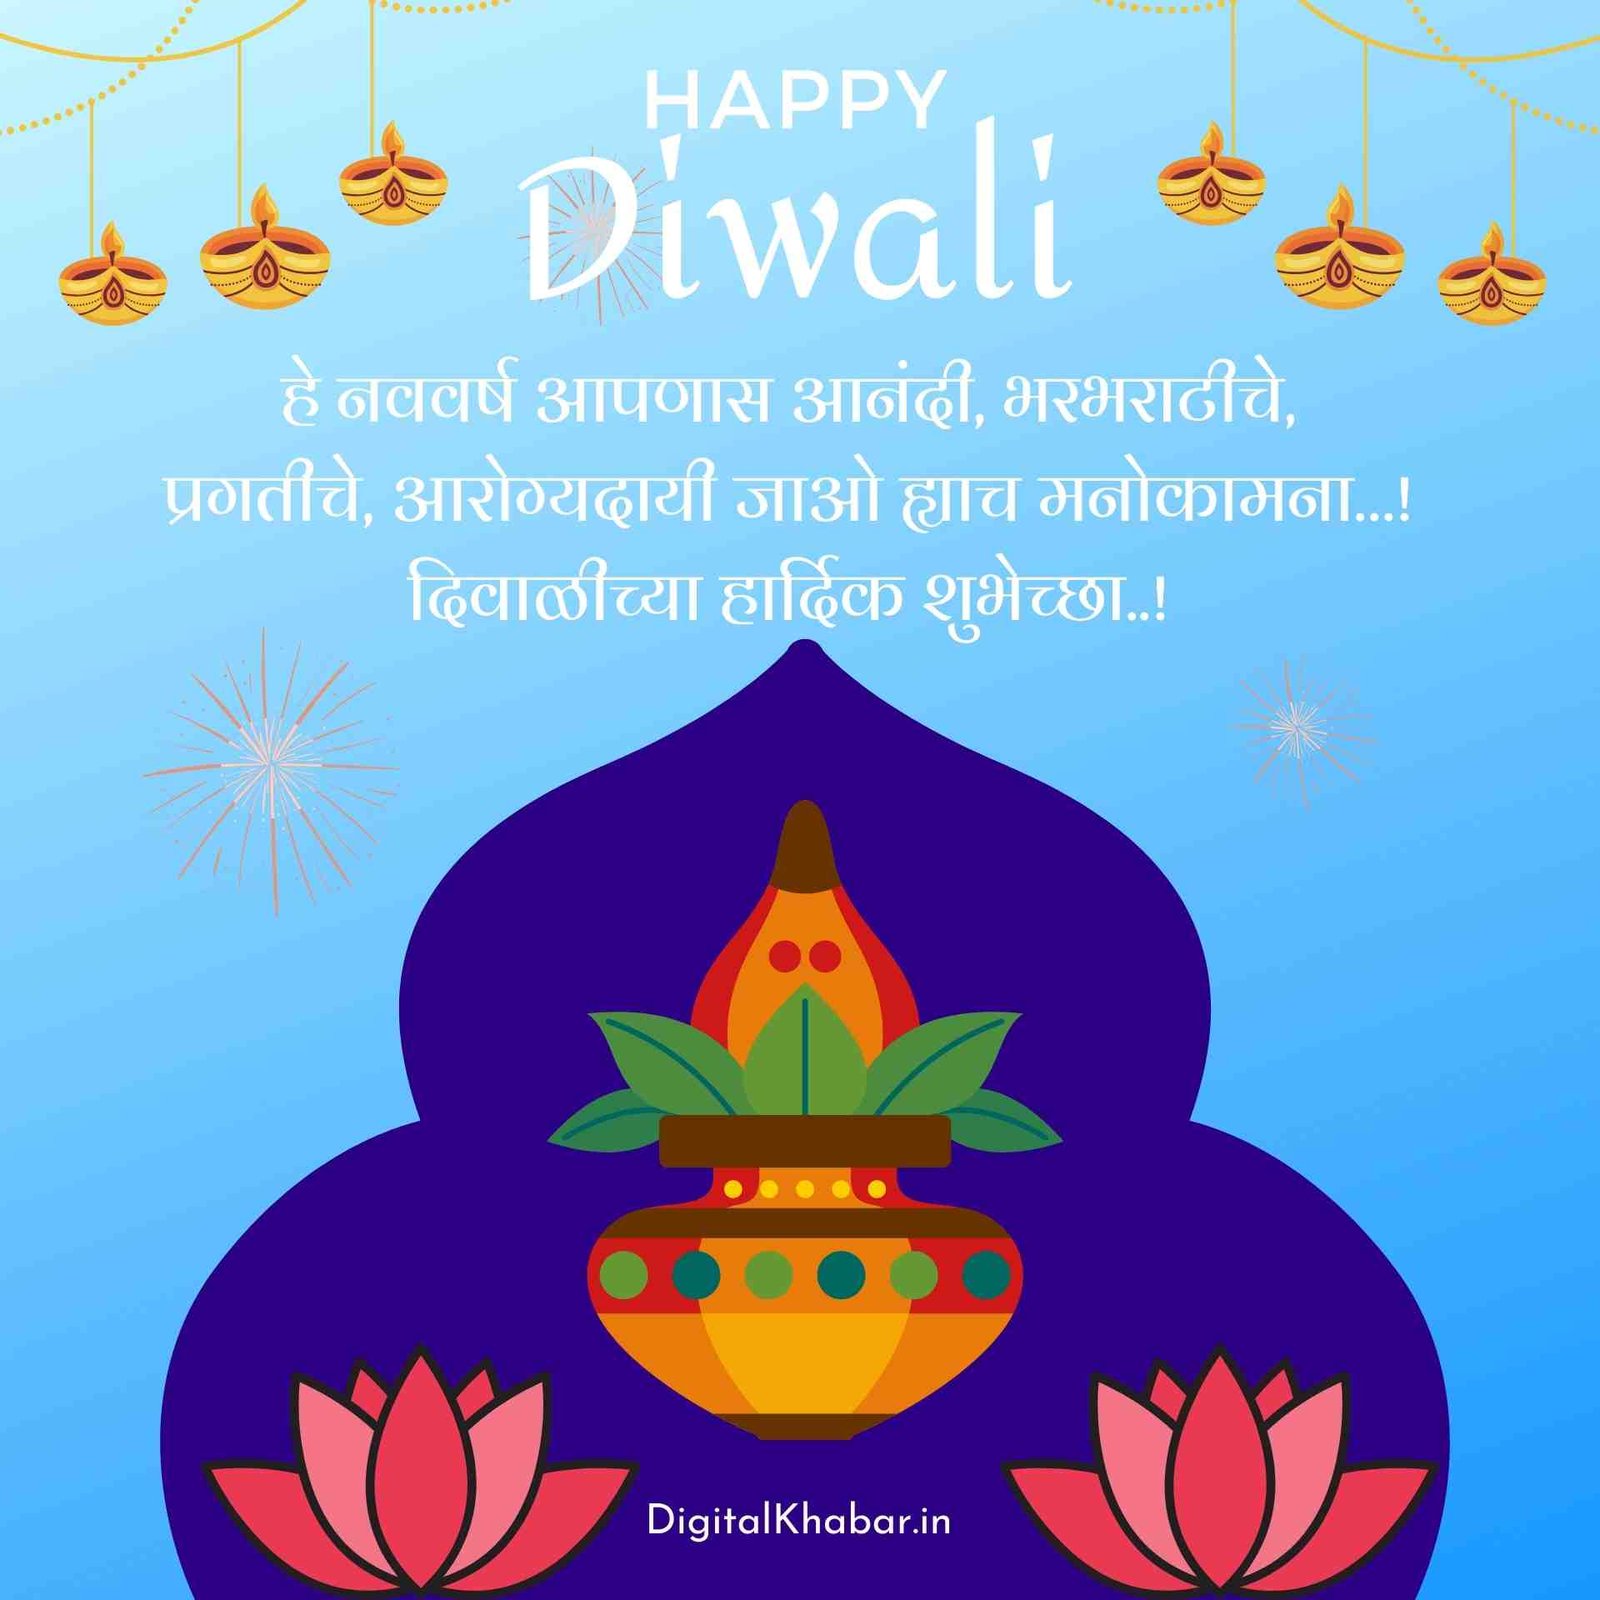 Whatsapp Happy Diwali Images